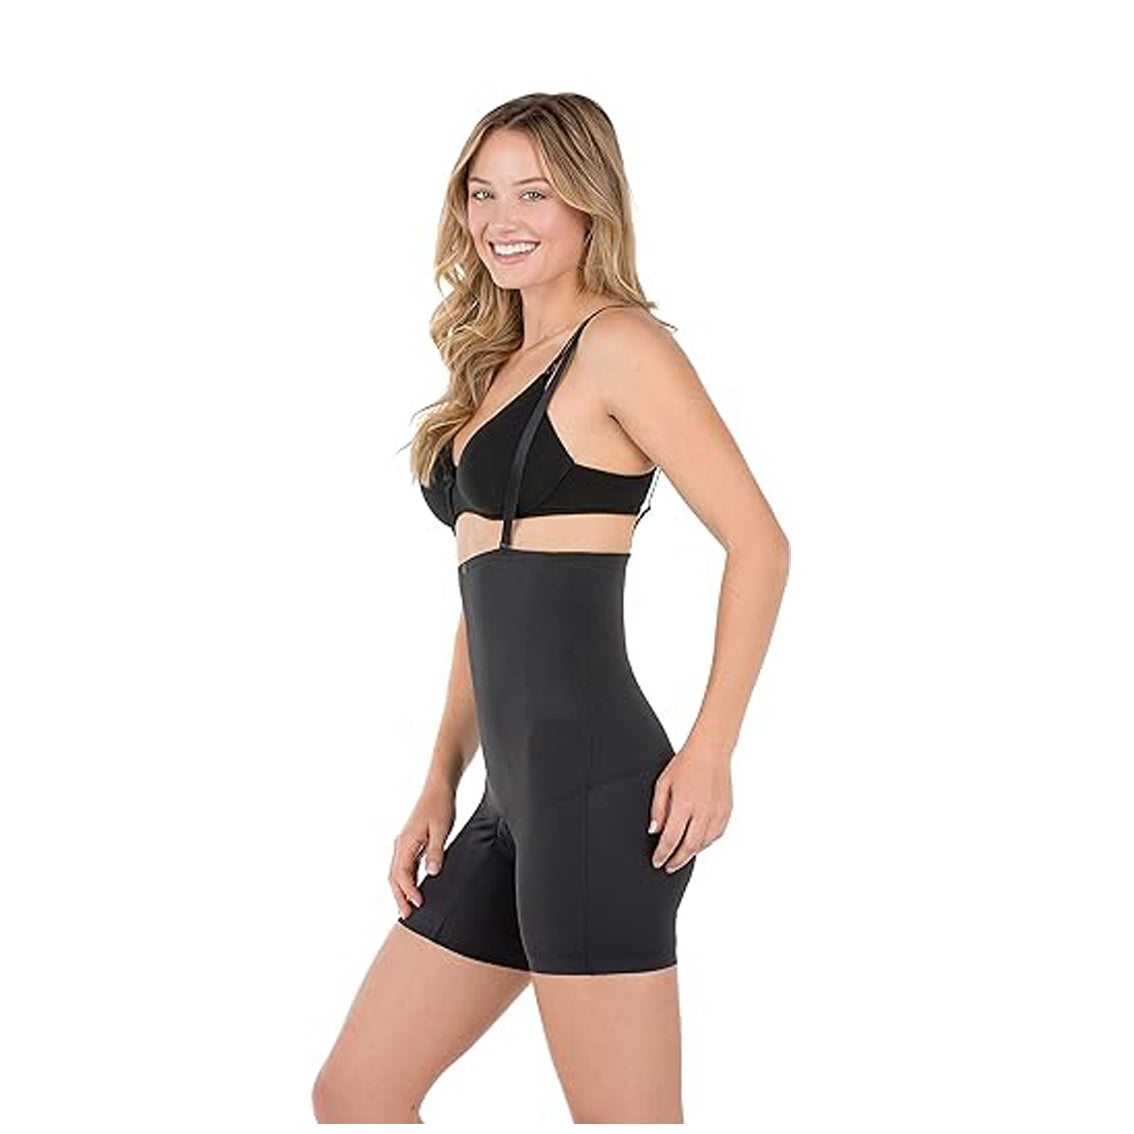 Delta Burke Intimates Women's Plus-Size Seamless Comfort Bra - 3 Pack -  Nude, White, & Black - 2X